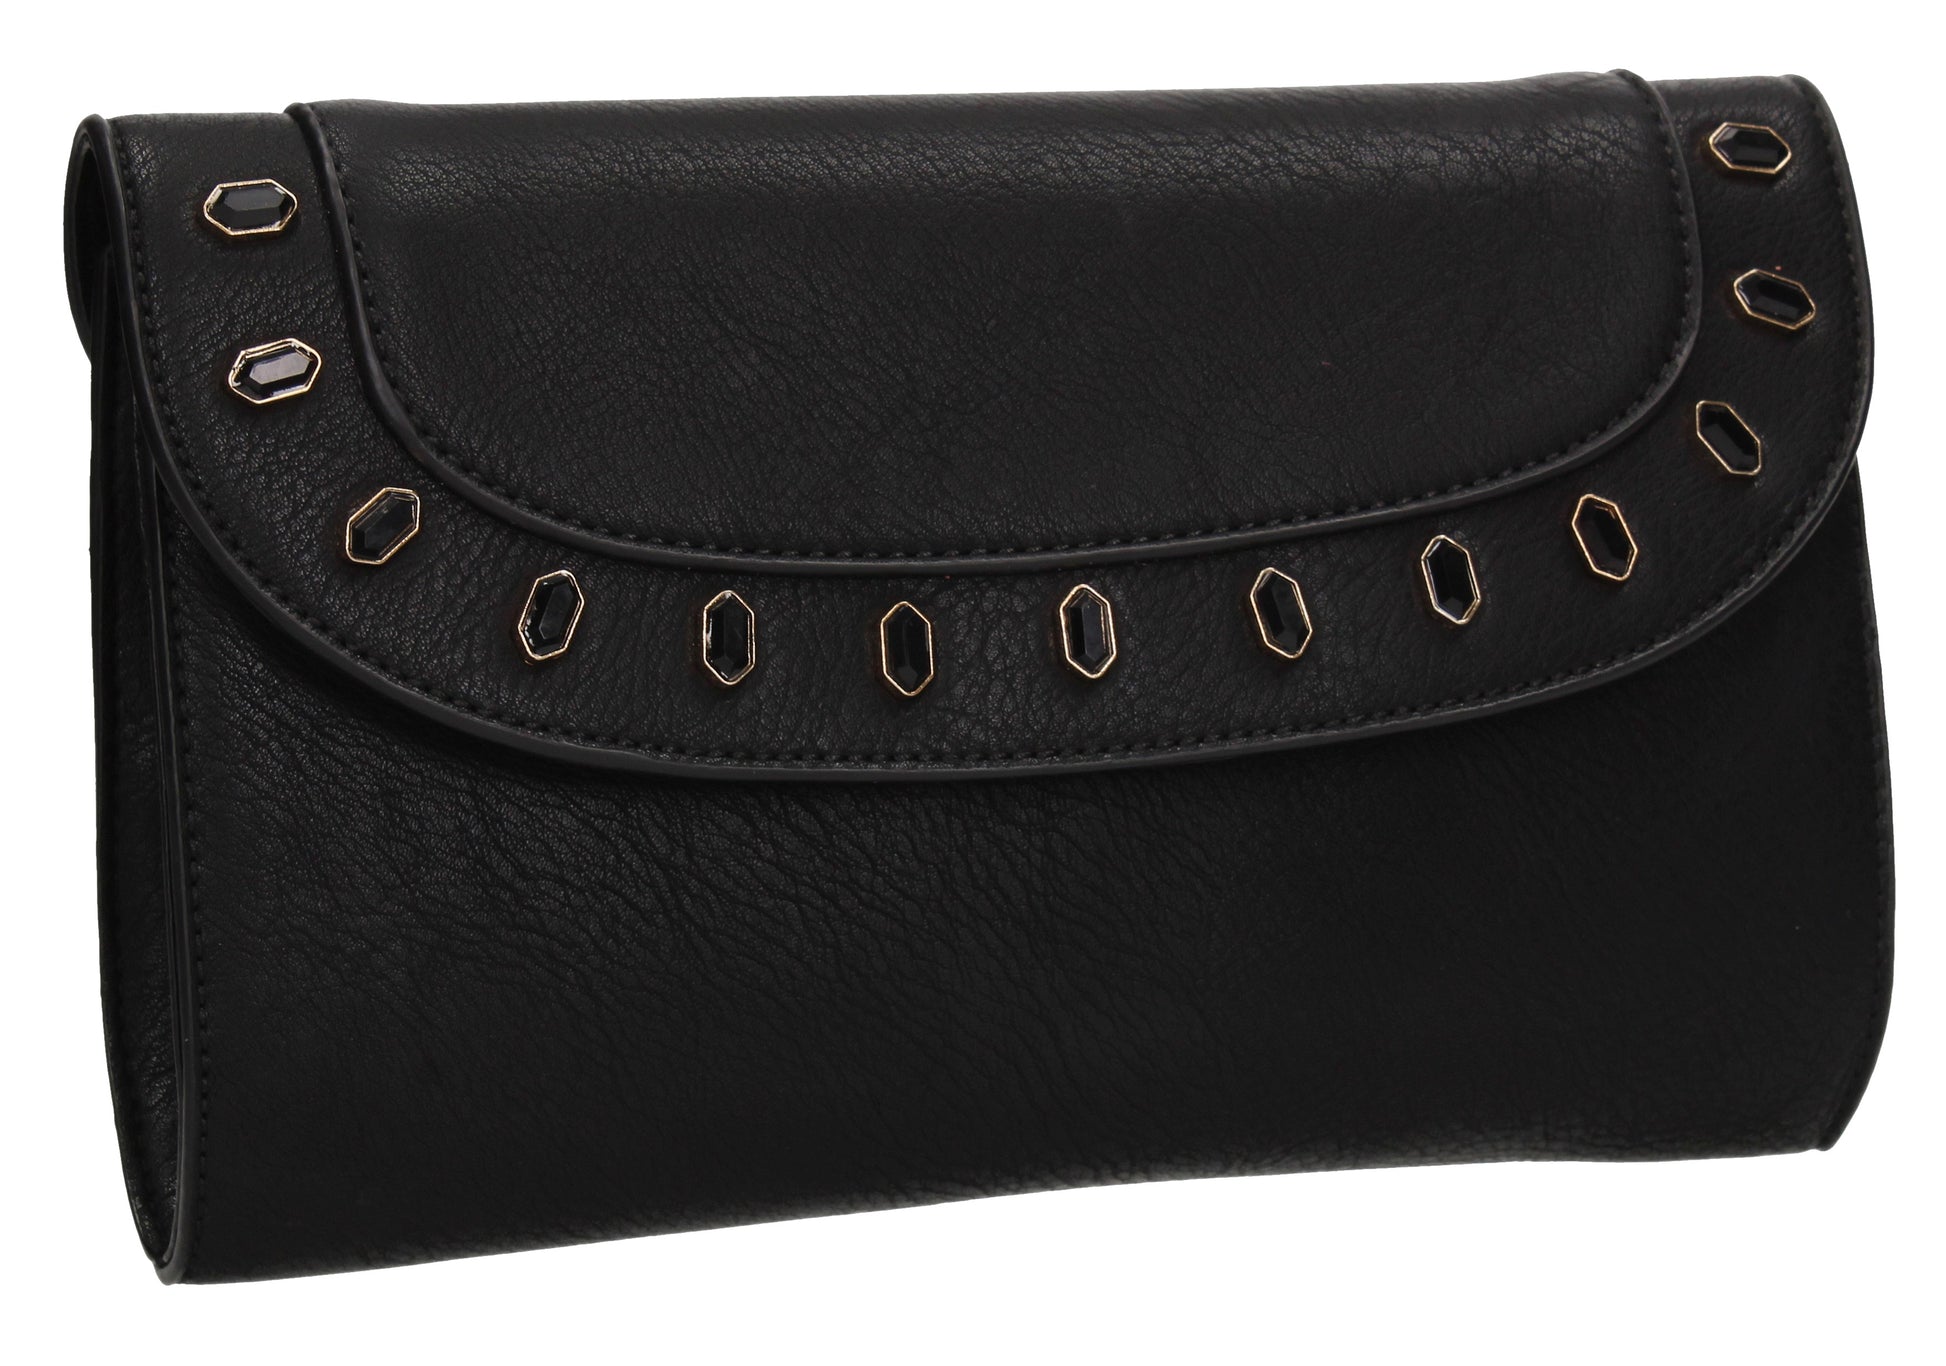 SWANKYSWANS Tiare Onyx Style Clutch Bag Black Cute Cheap Clutch Bag For Weddings School and Work